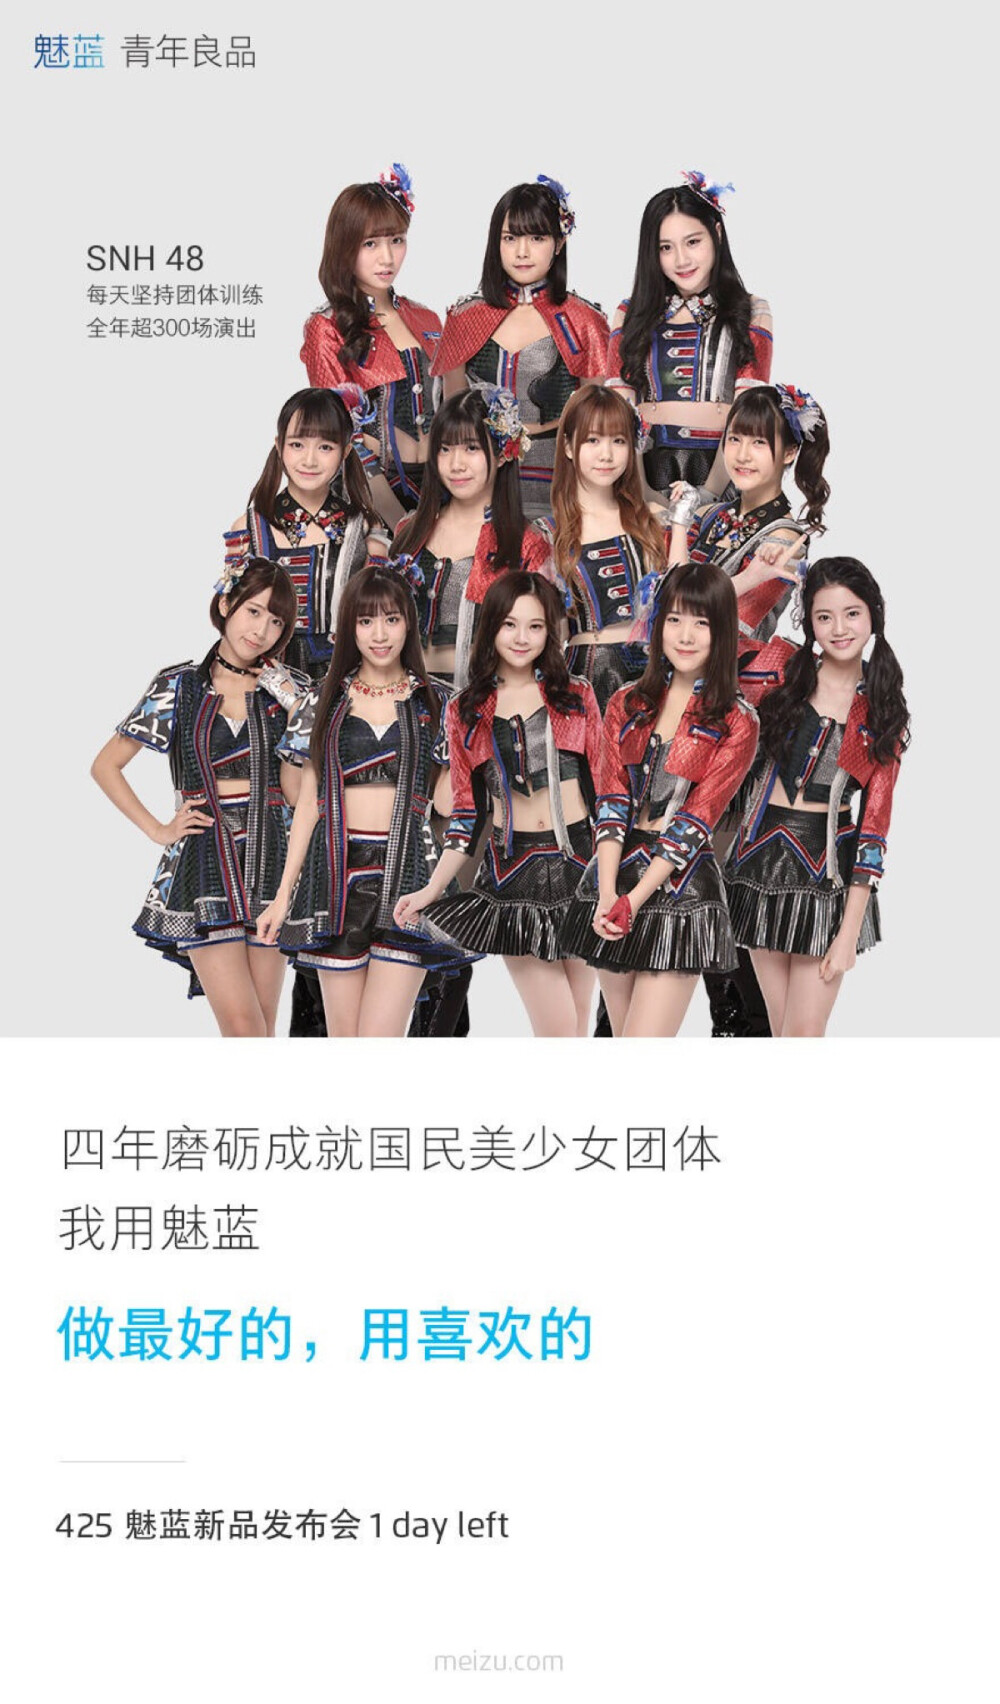 snh48 team hii 刘佩鑫 魅蓝宣传